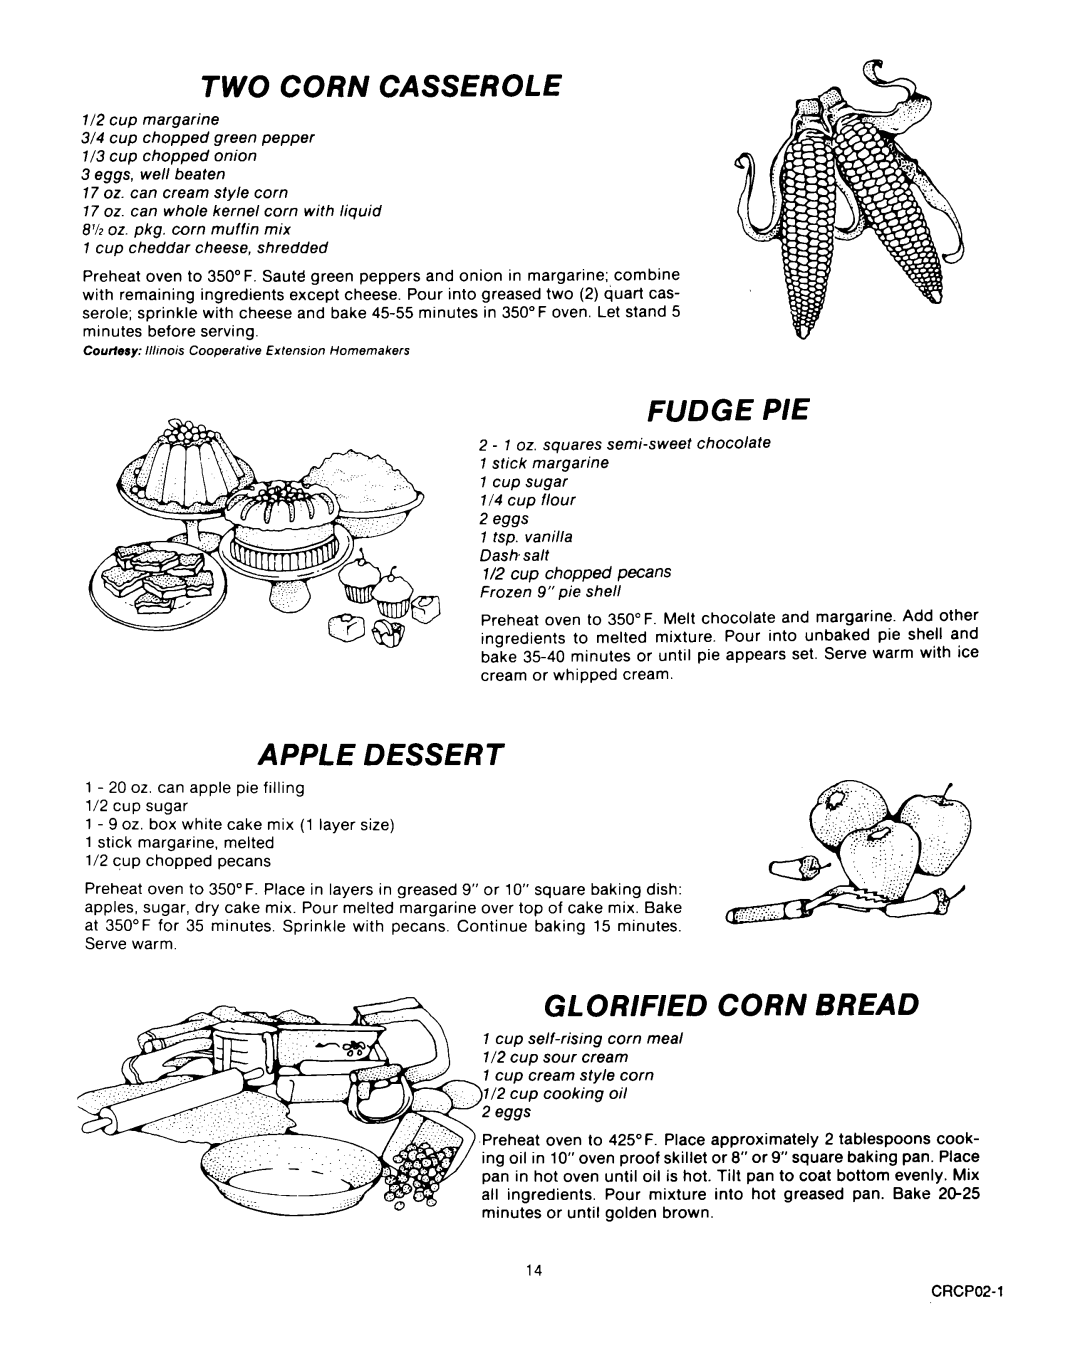 Roper D975 owner manual Two Corn Casserole, Fudge Pie, Apple Dessert, Glorified Corn Bread 